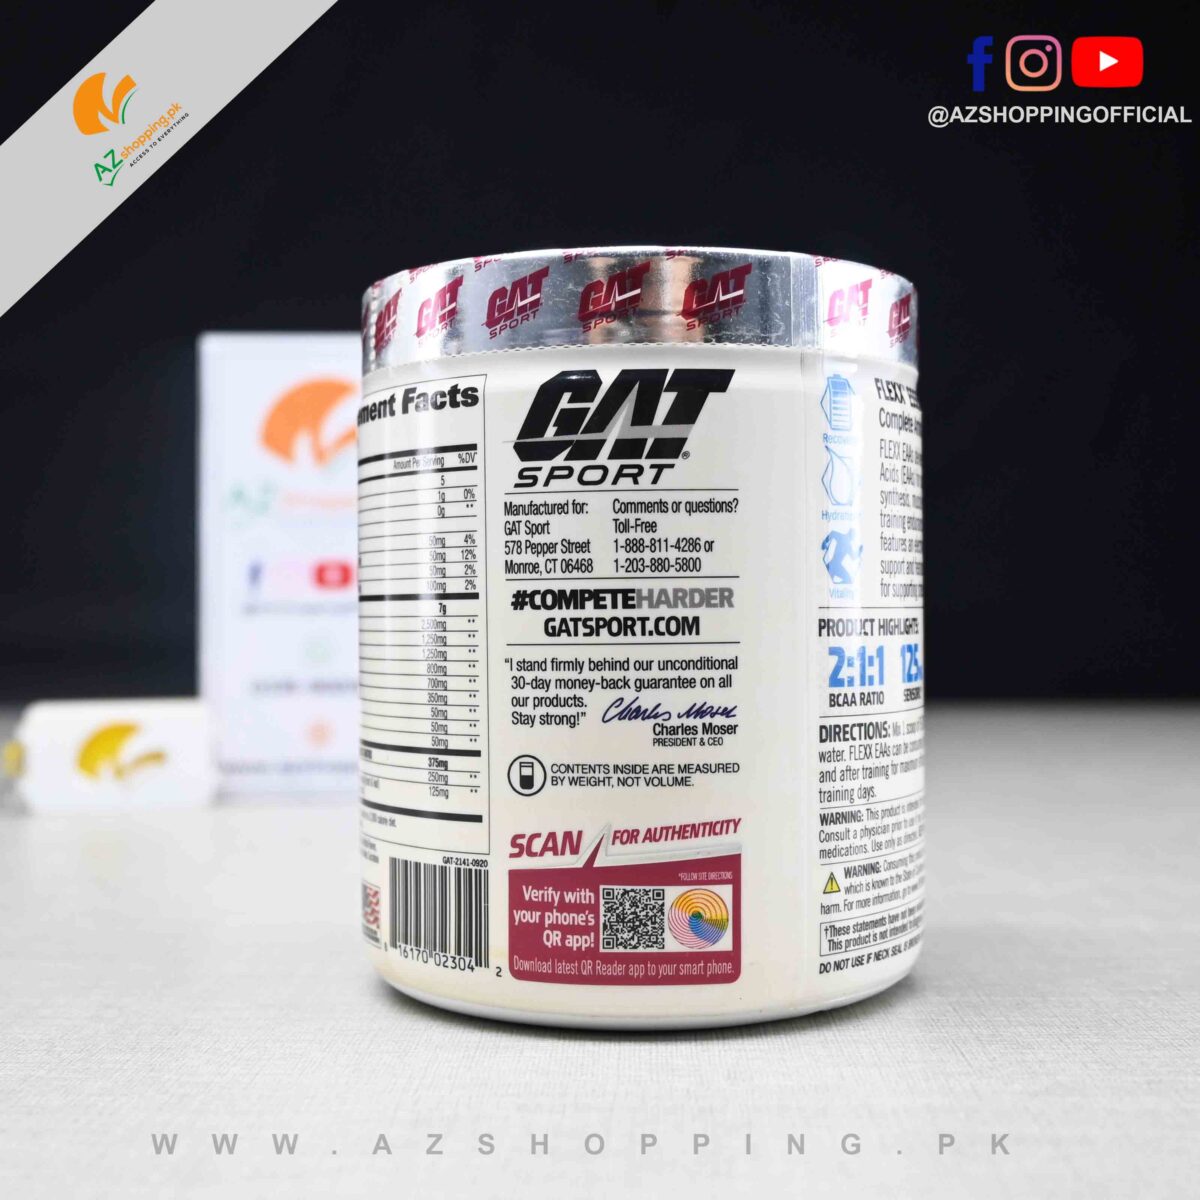 GAT Sport – Flexx EAAs + Hydration – Advance Essential Amino Acids with BCAAs - 30 Servings